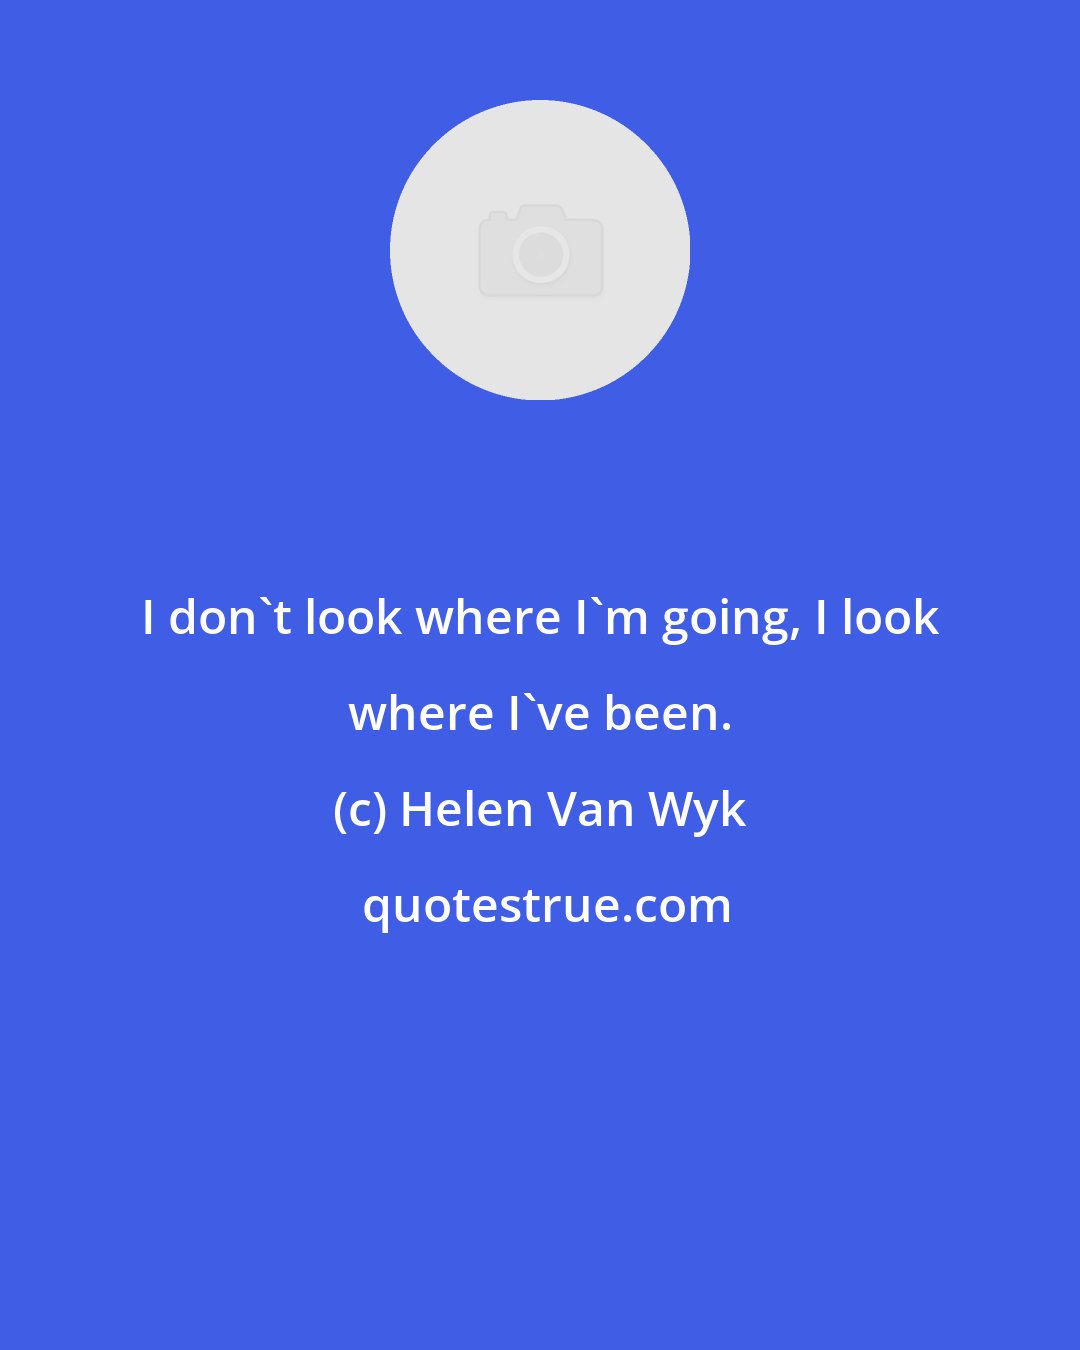 Helen Van Wyk: I don't look where I'm going, I look where I've been.